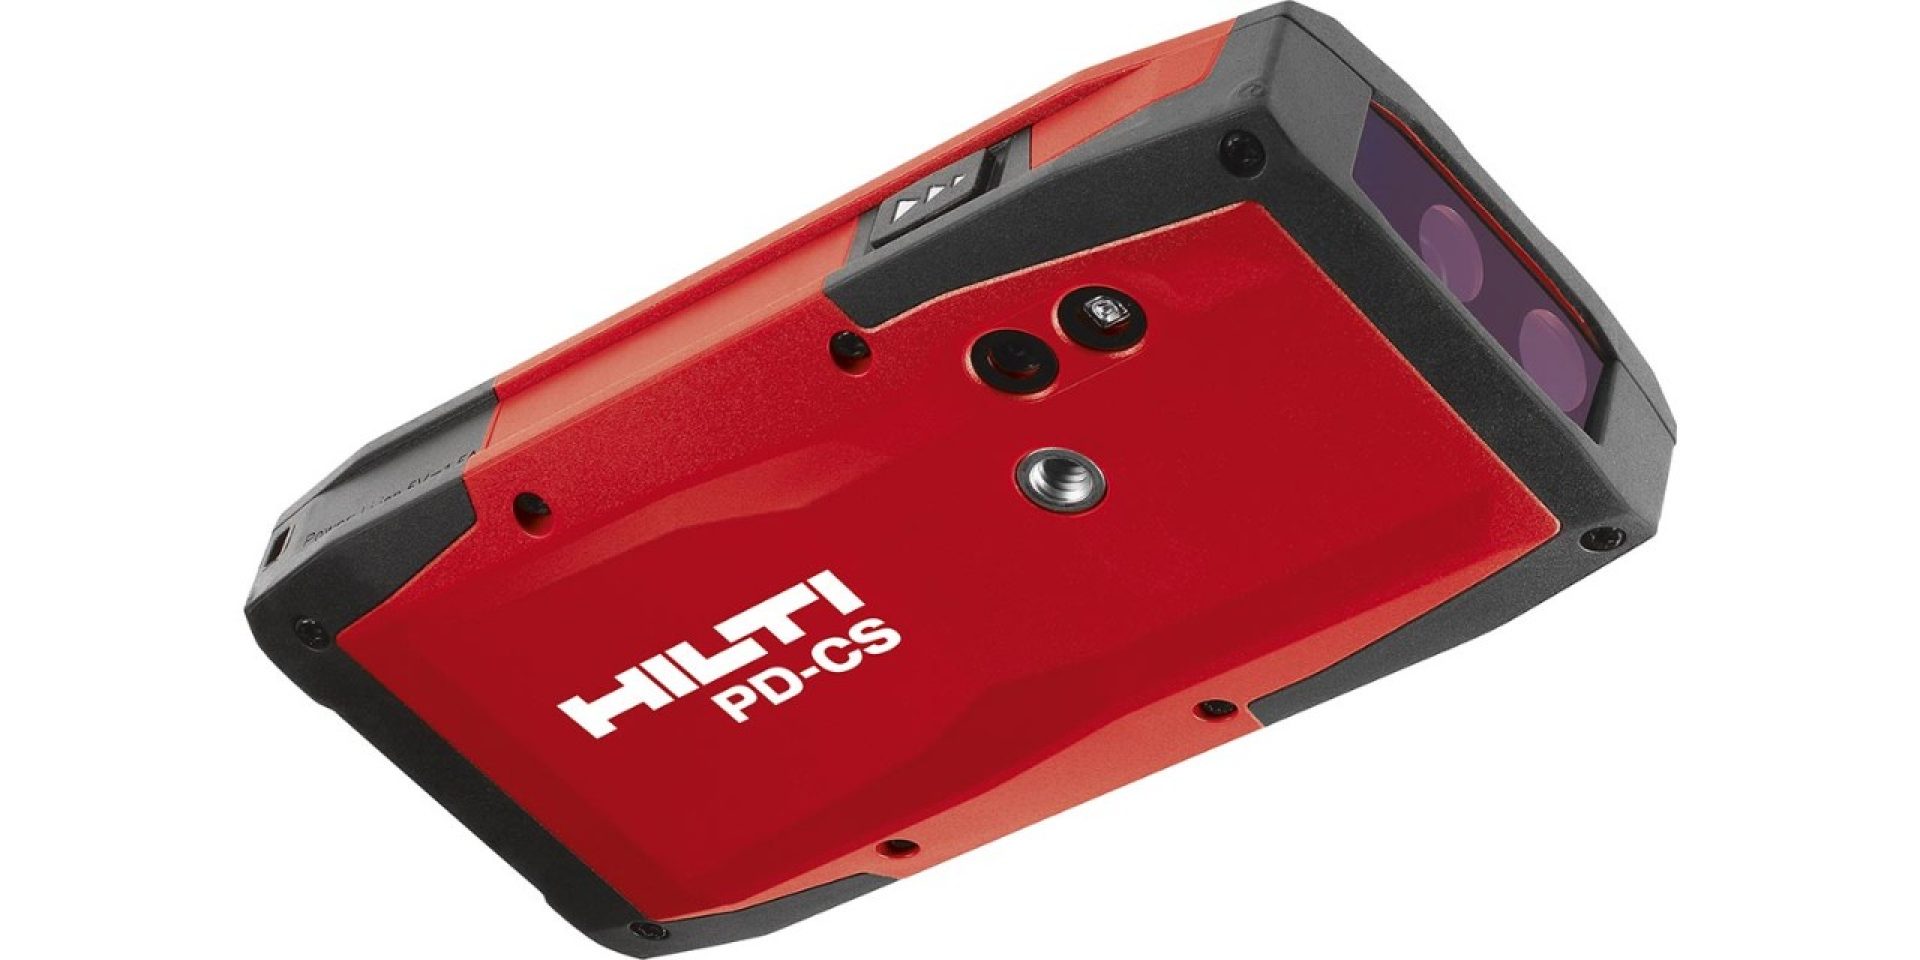 Hilti PD-CS  laser range meter with integrated camera module